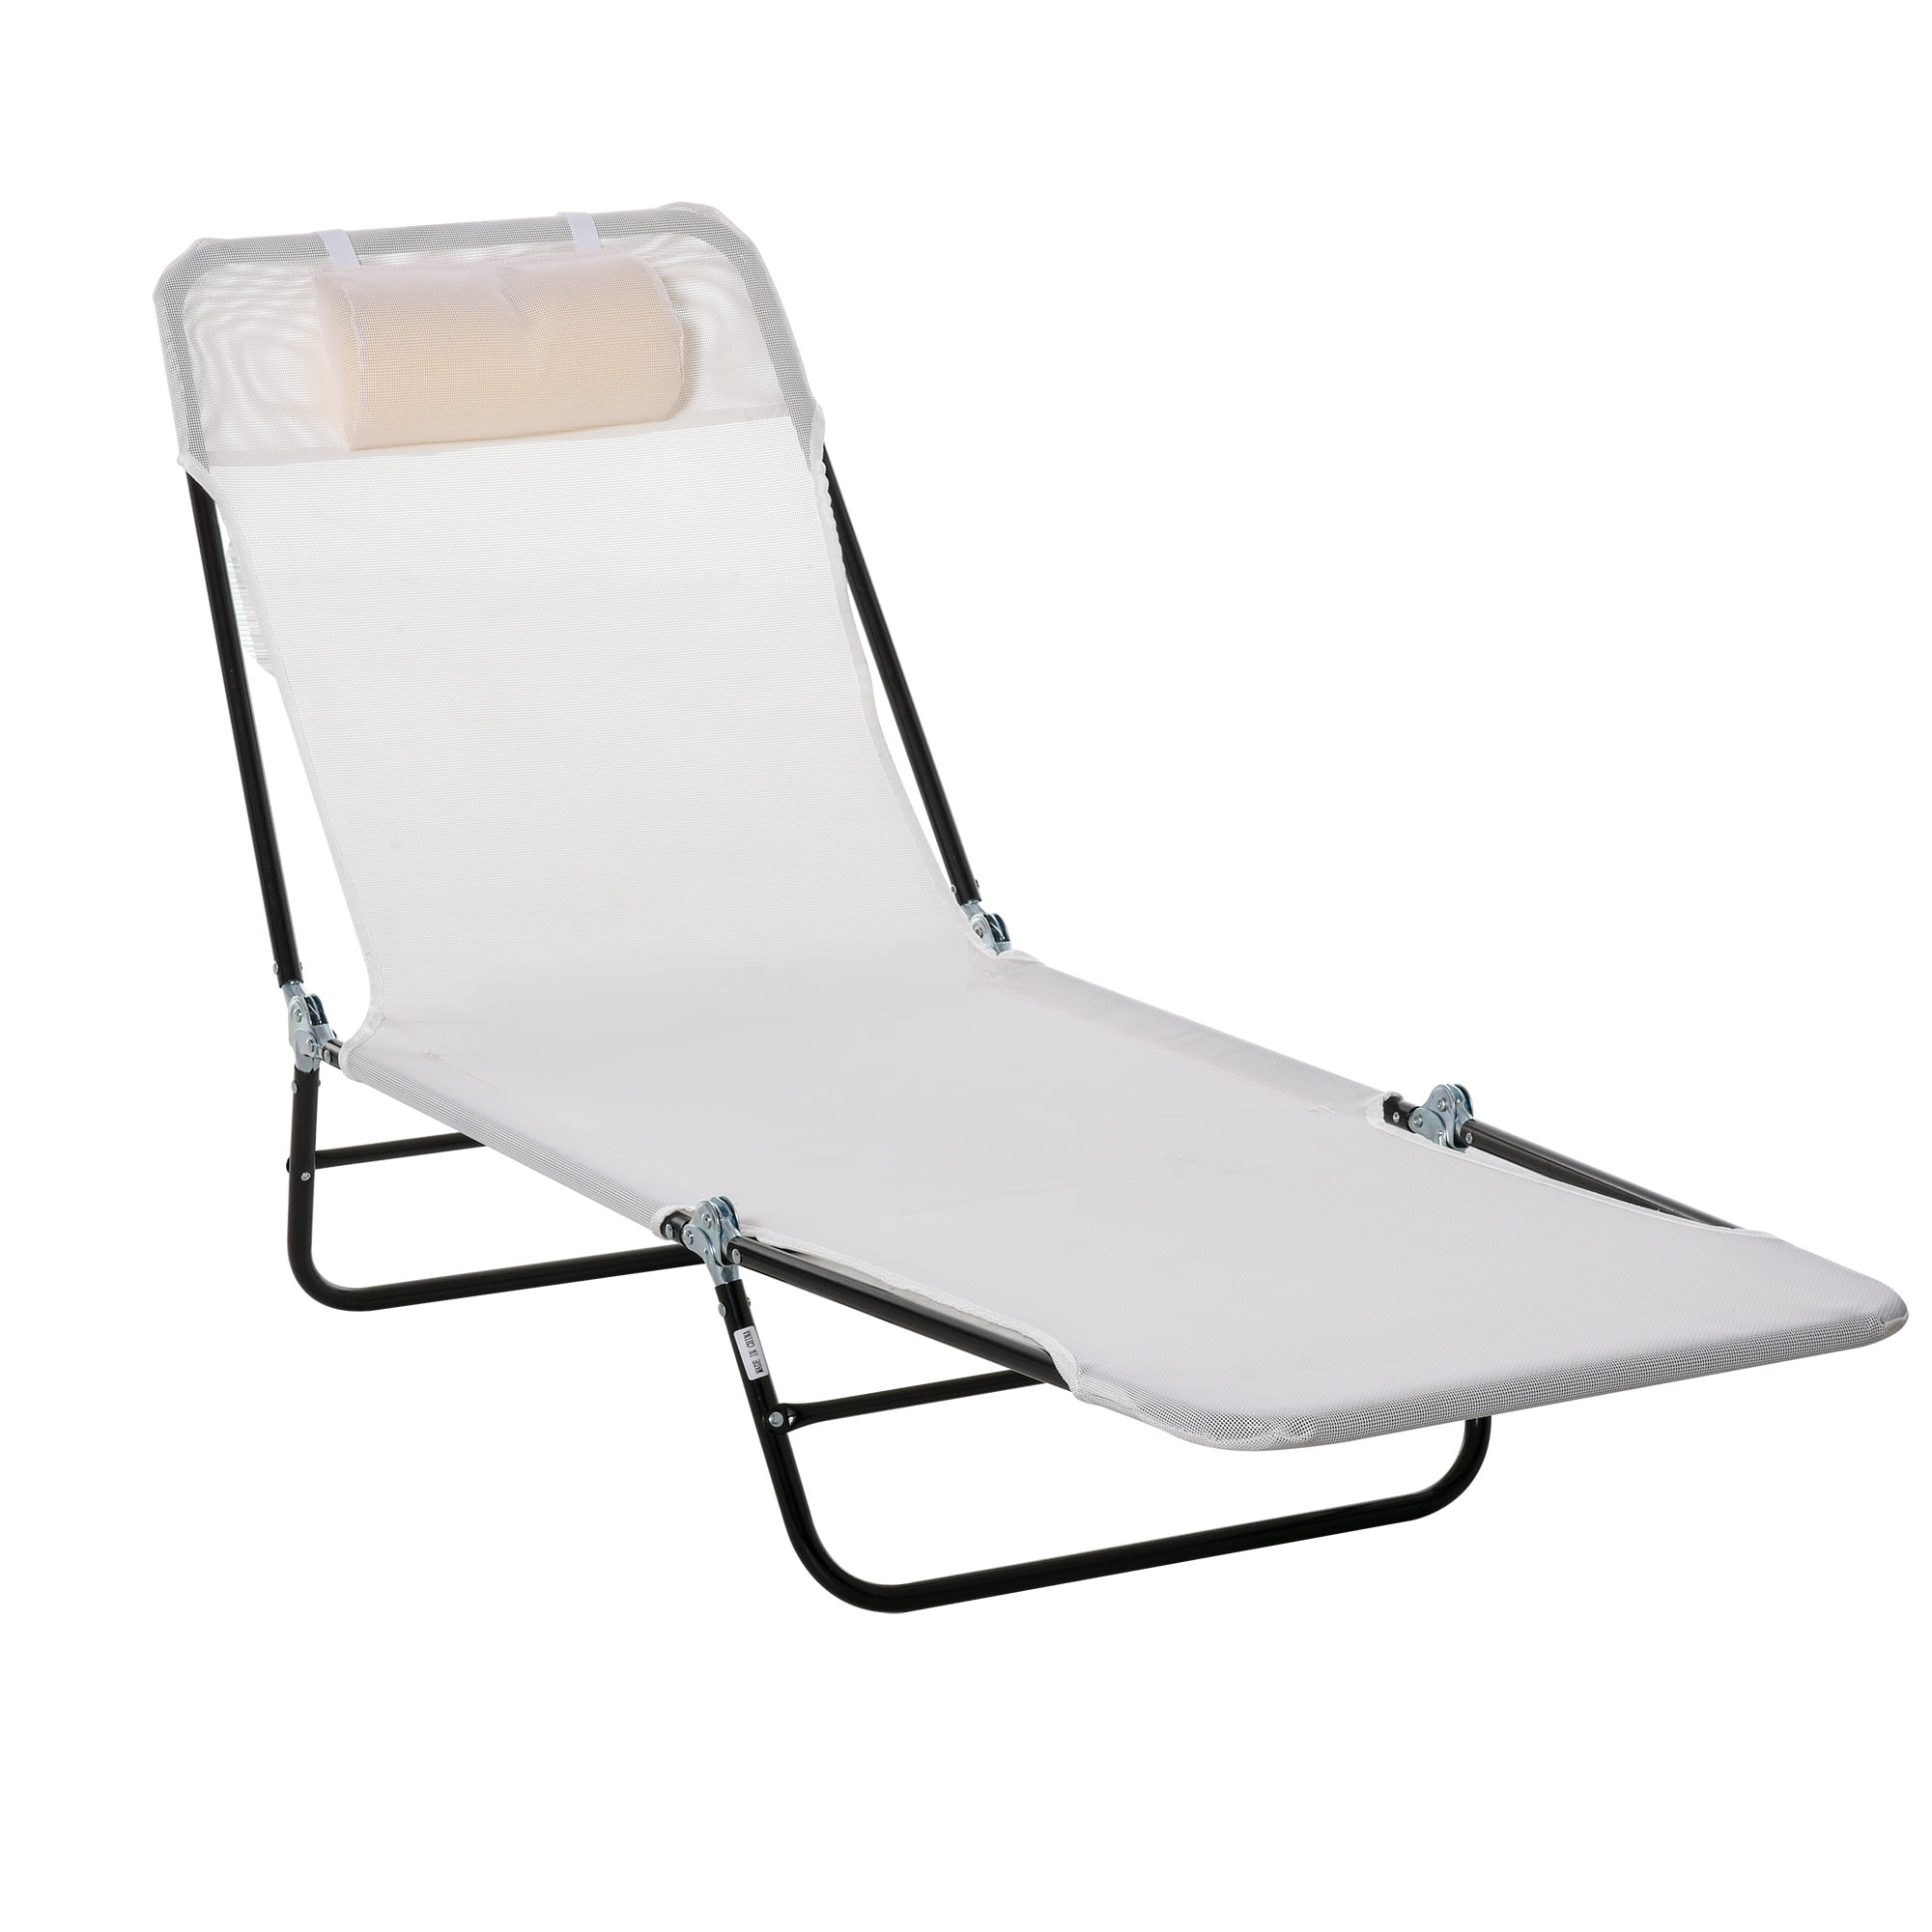 Outsunny Patio Sun Lounger Garden Textilene Foldable Reclining Chair w/Pillow Outdoor Adjustable Recliner Black